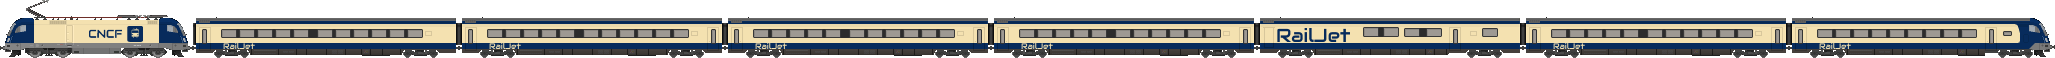 RailJet CNCF